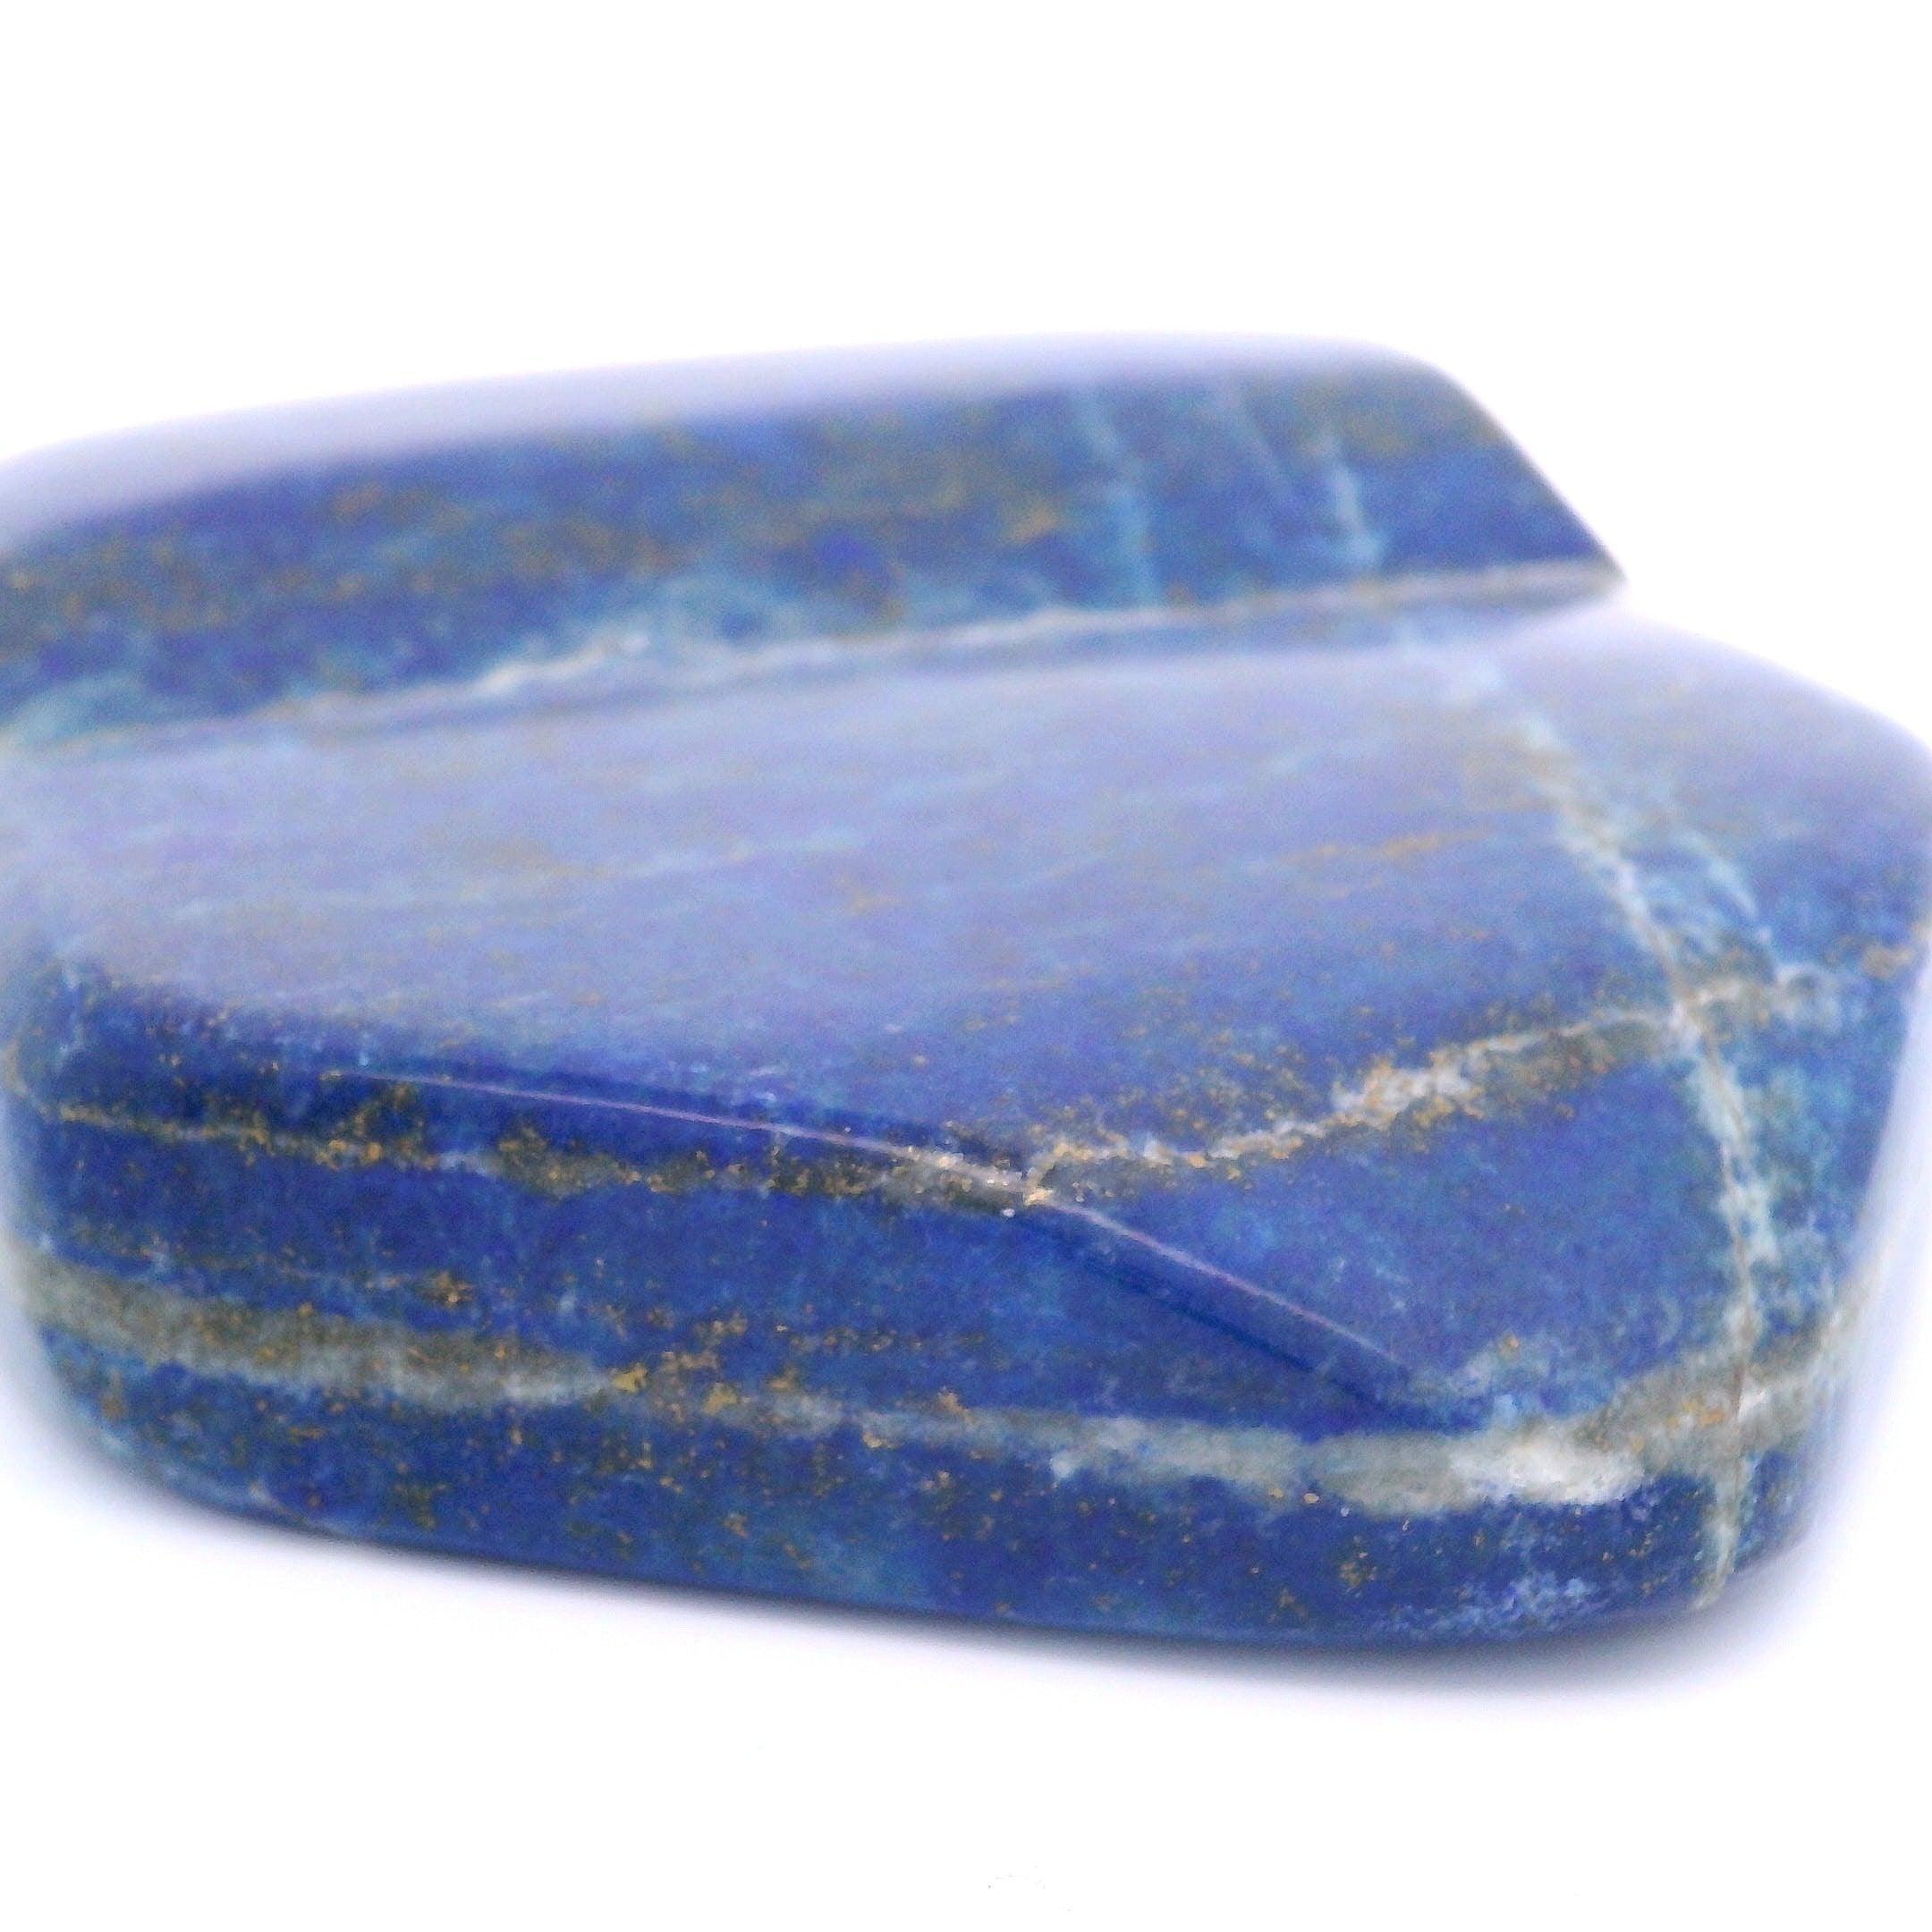 Freeform Carved Lapis Lazuli Slab